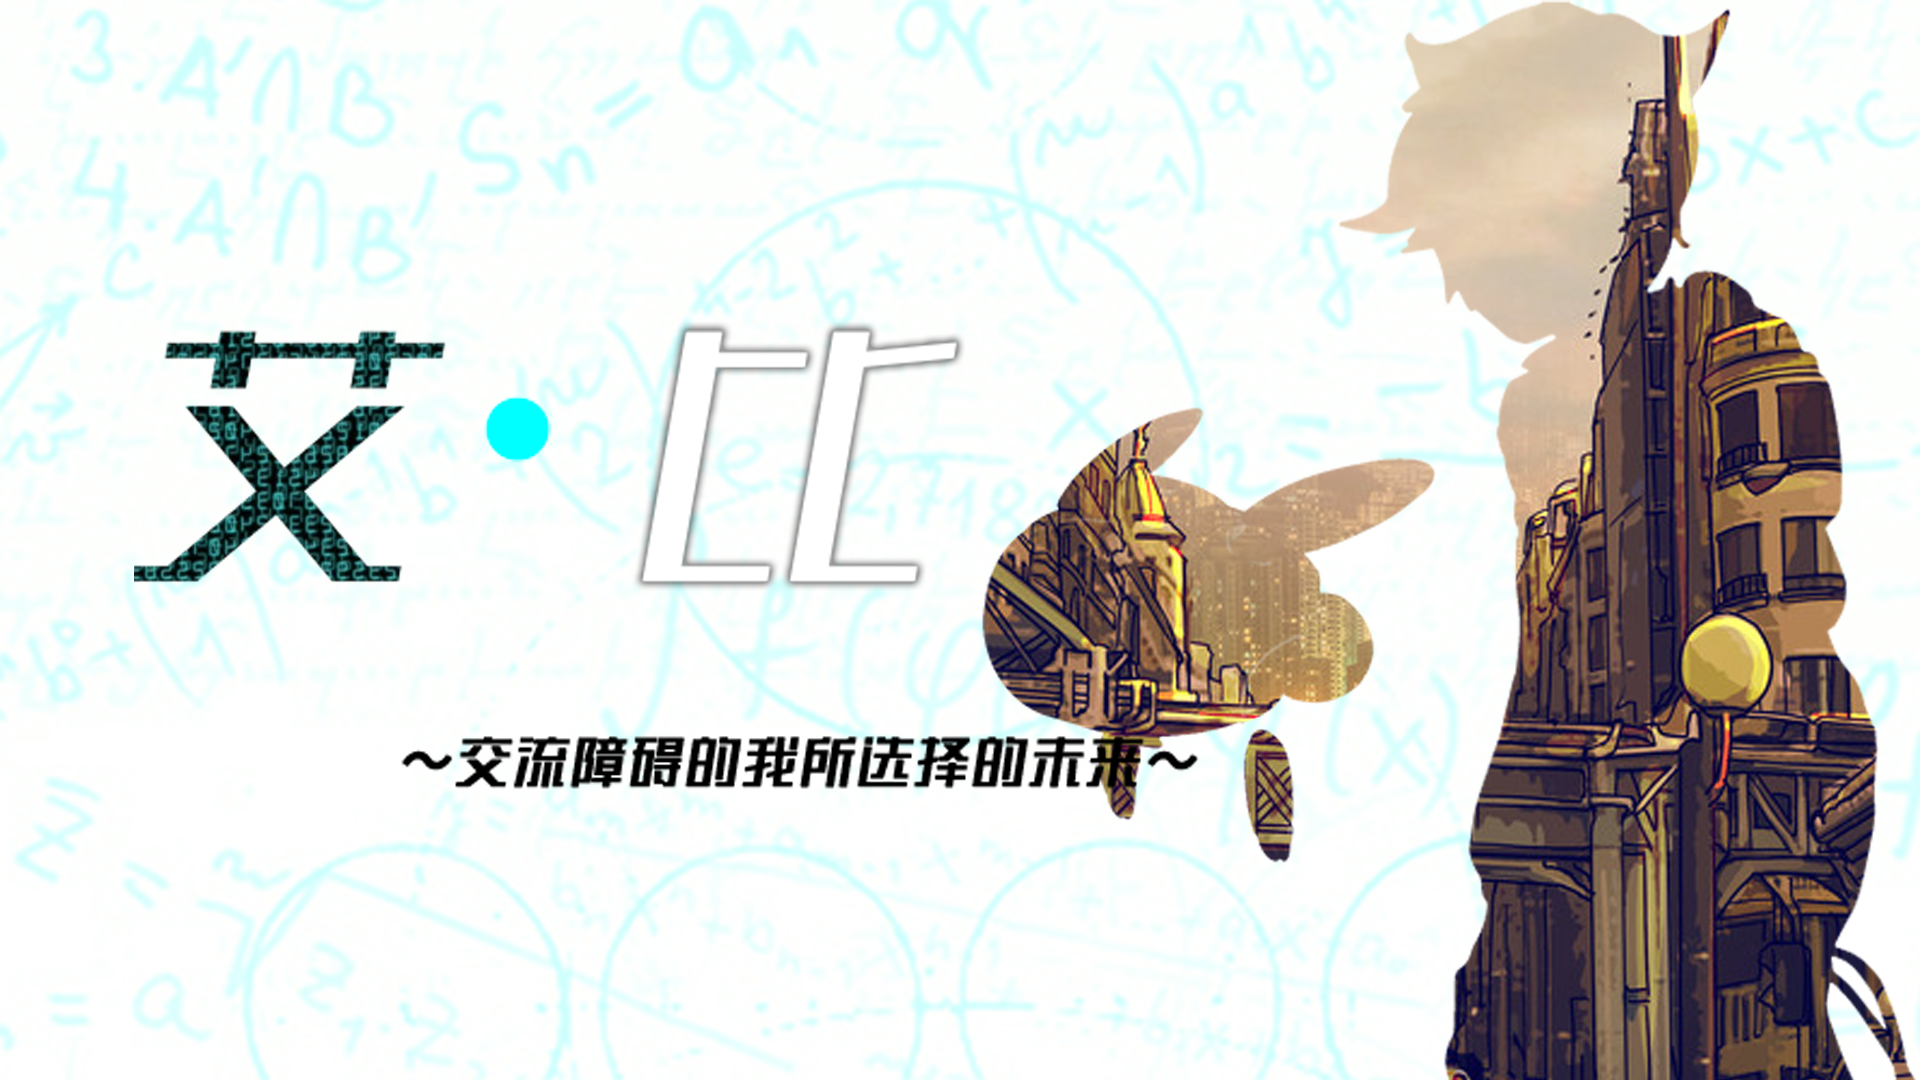 Banner of 怪異揭示板 1.0.1